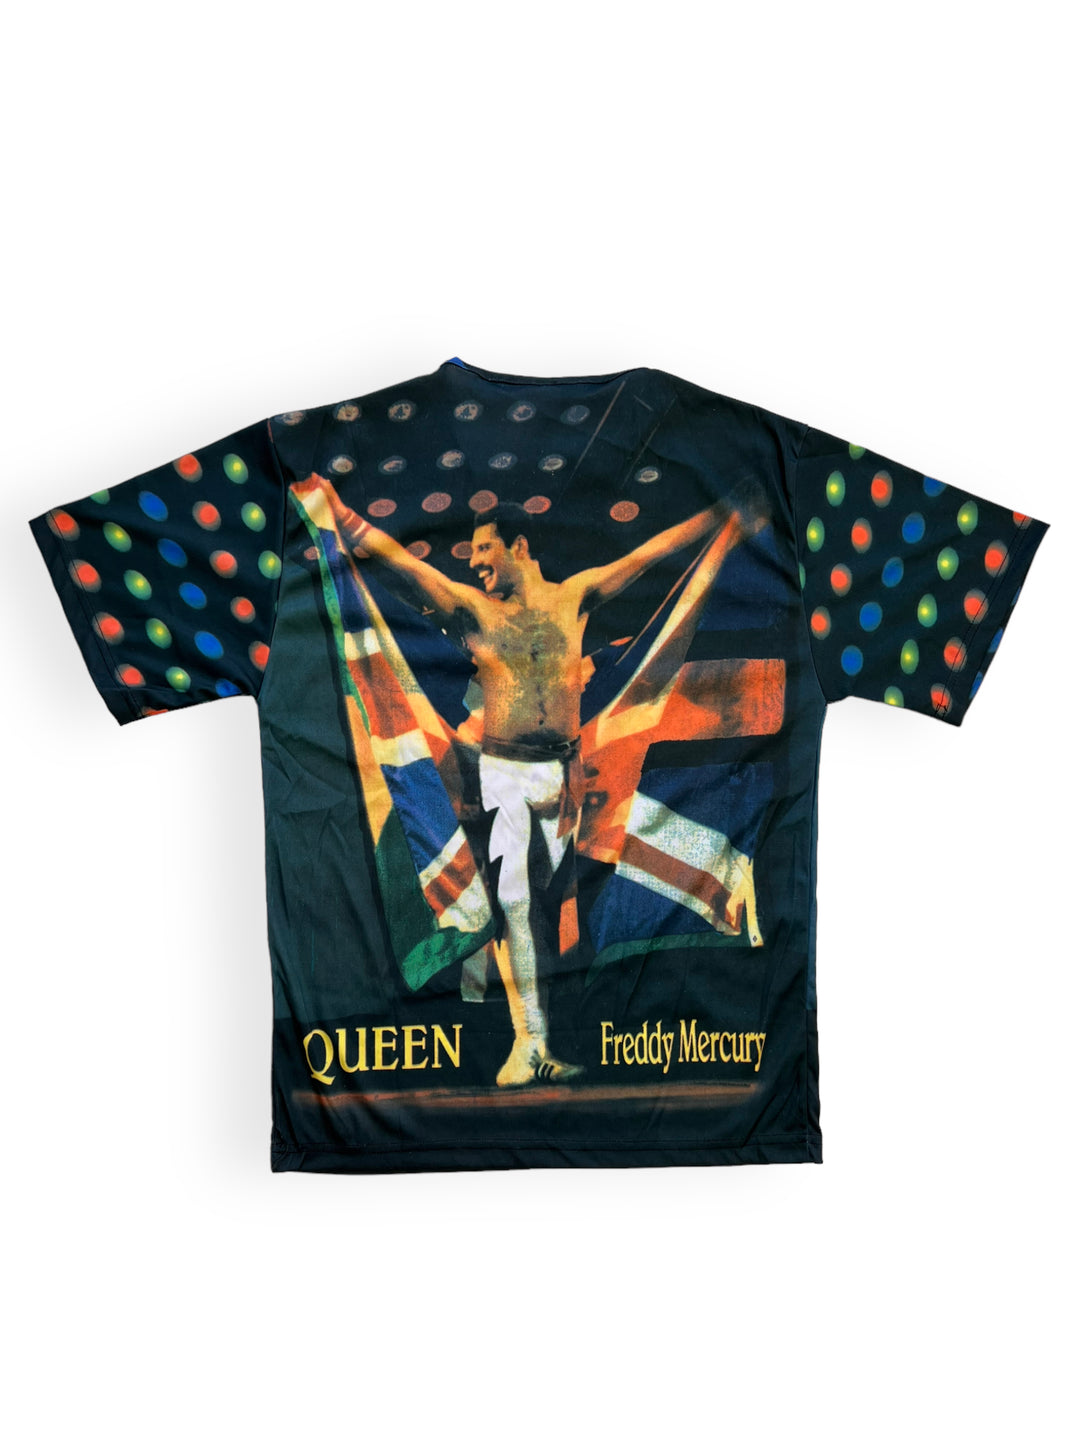 Vintage Freddie Mercury Queen Concert T-Shirt Men’s Small